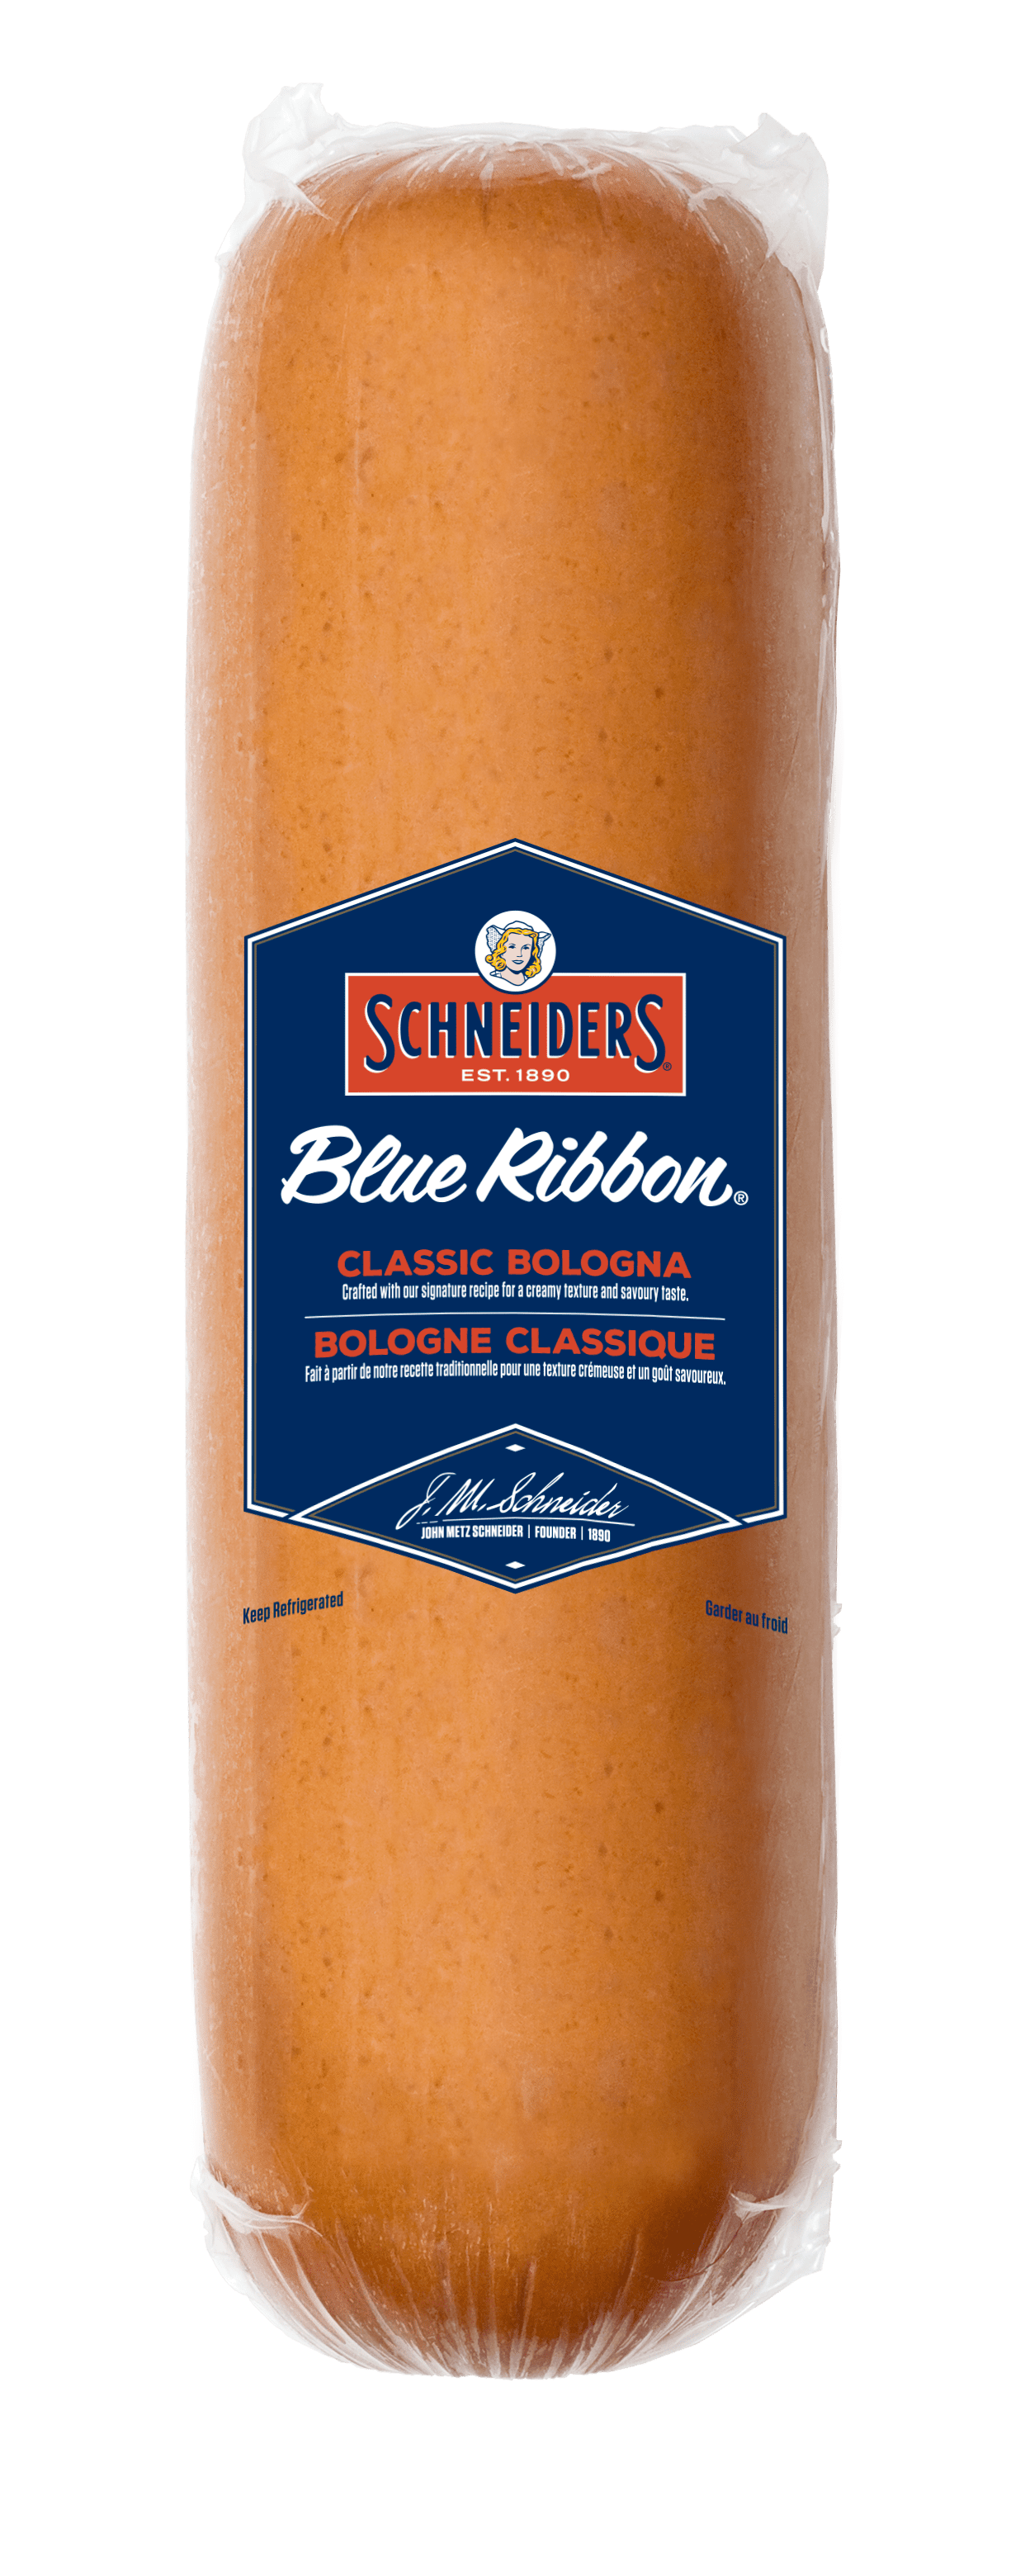 Schneiders Blue Ribbon Classic Bologna